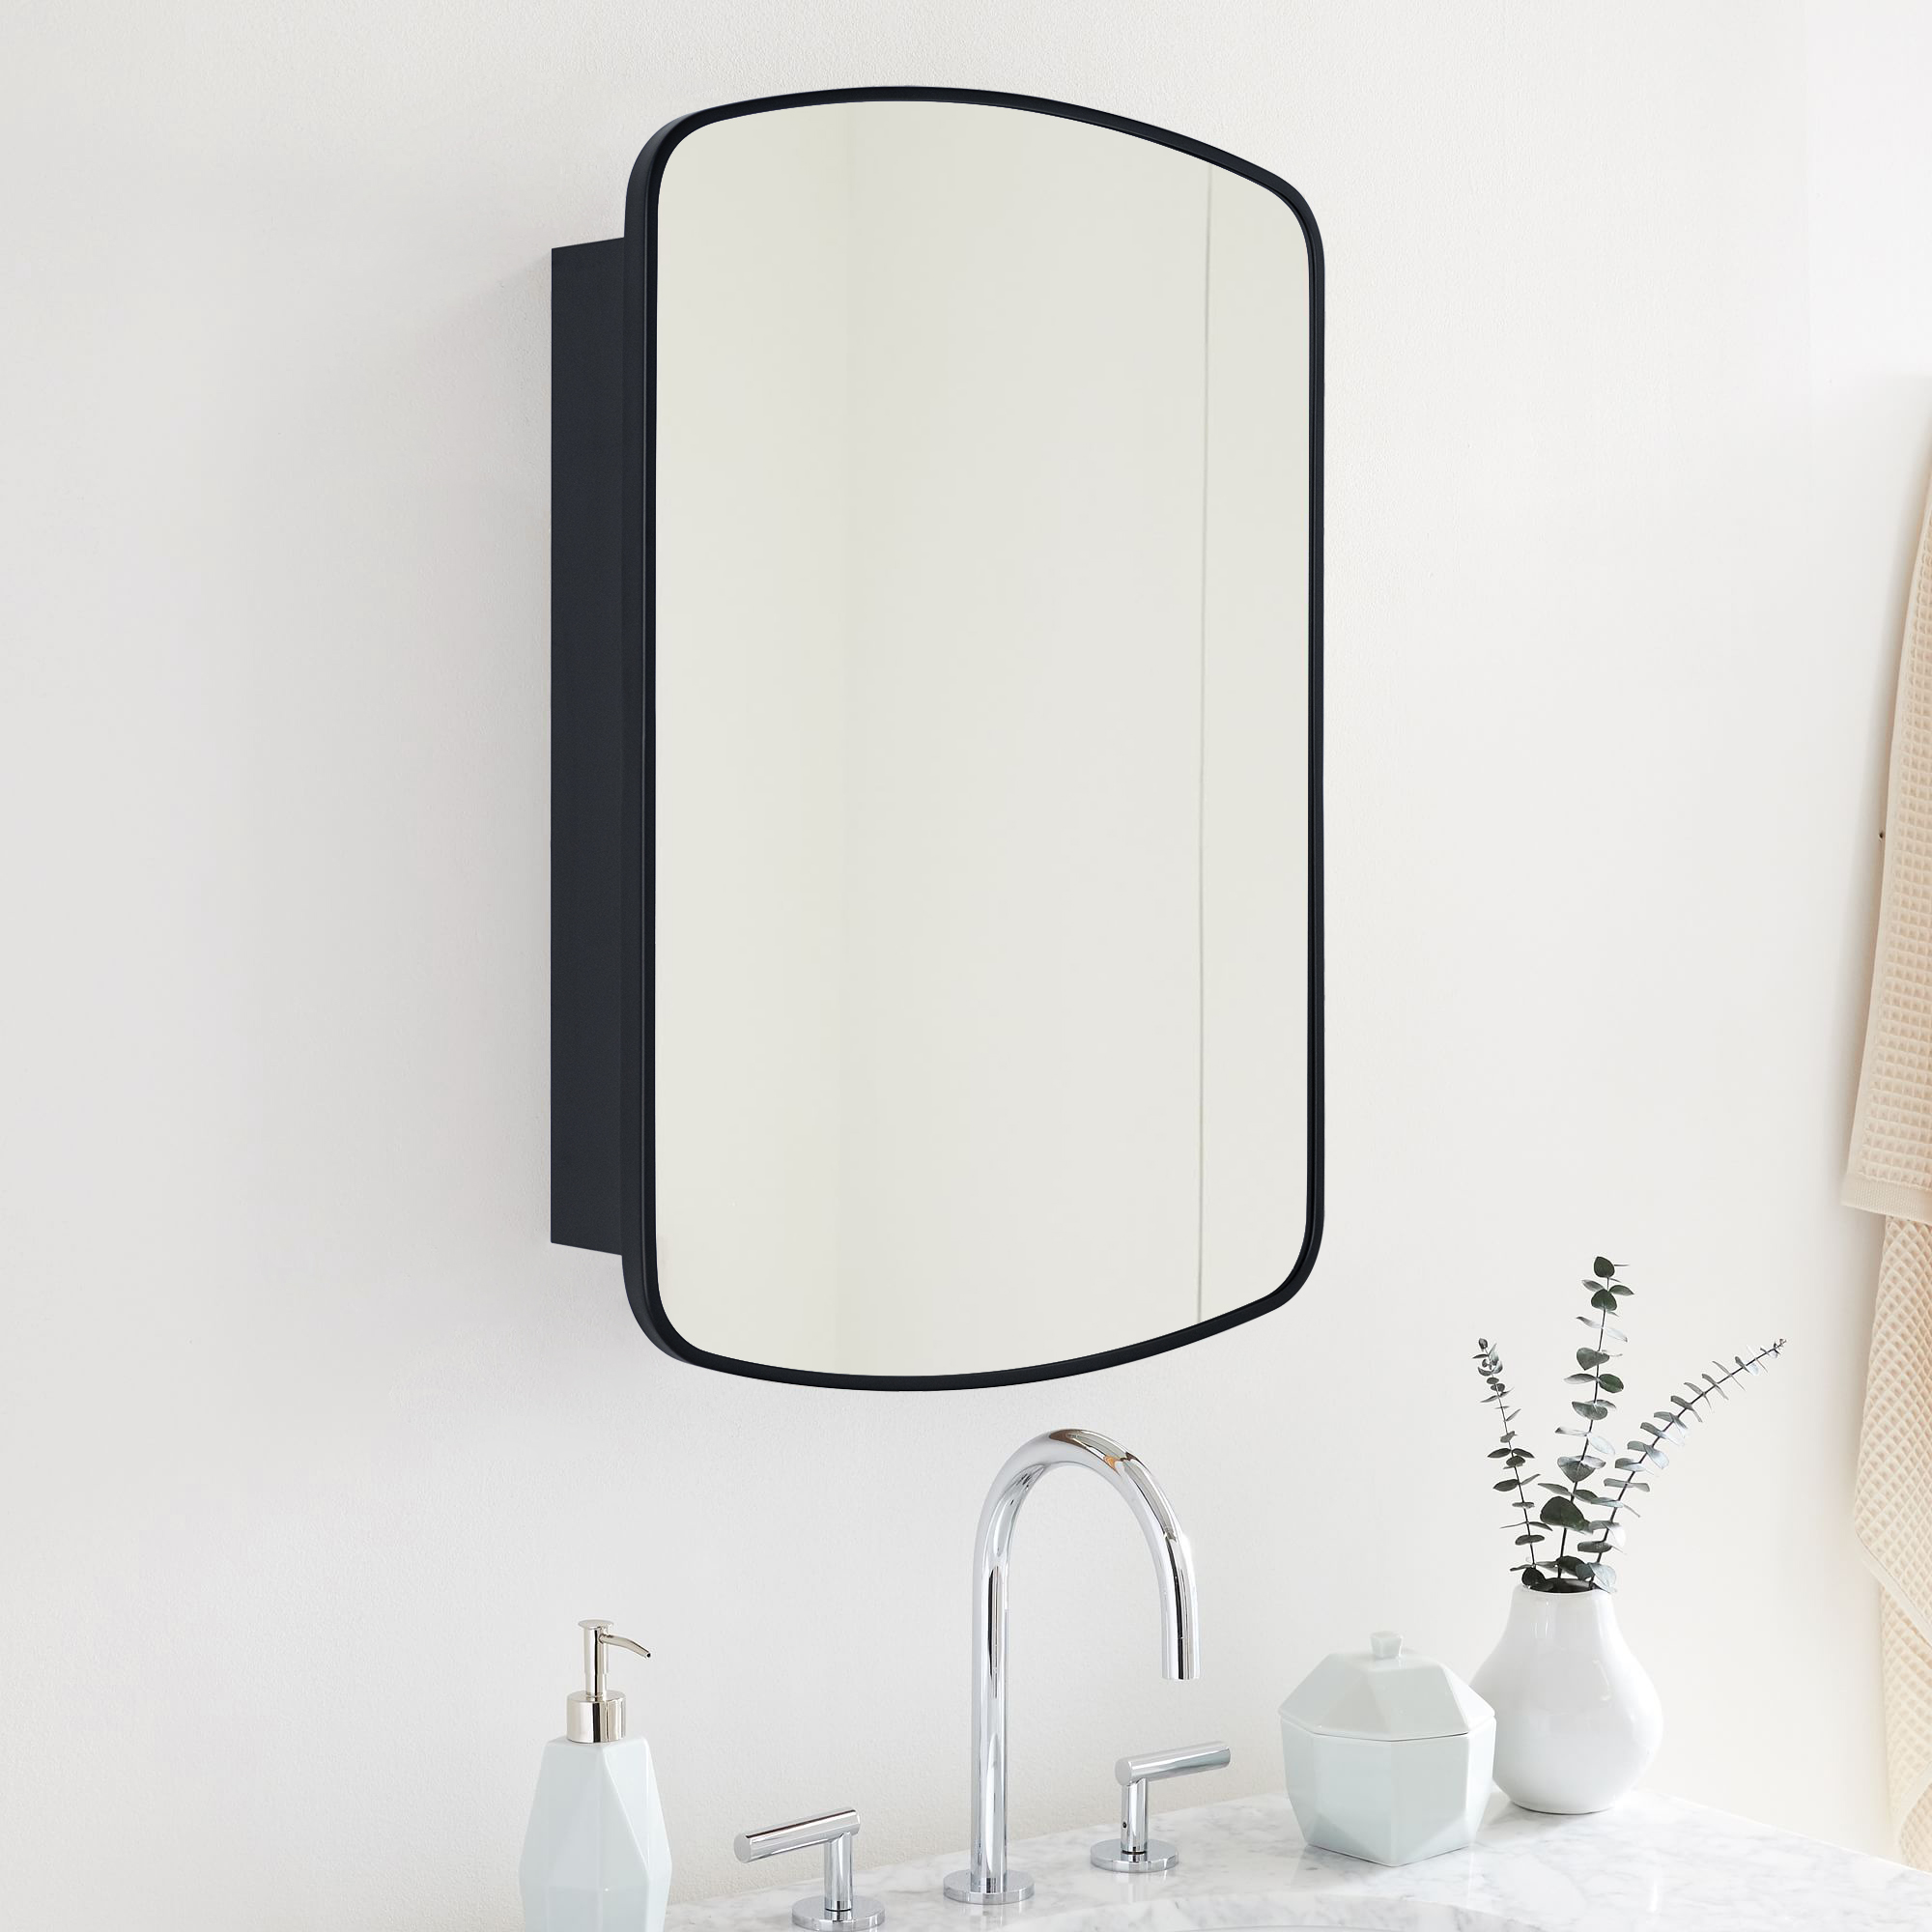 Recessed Mount Arched Black Metal Framed Bathroom Medicine Cabinet with Mirror